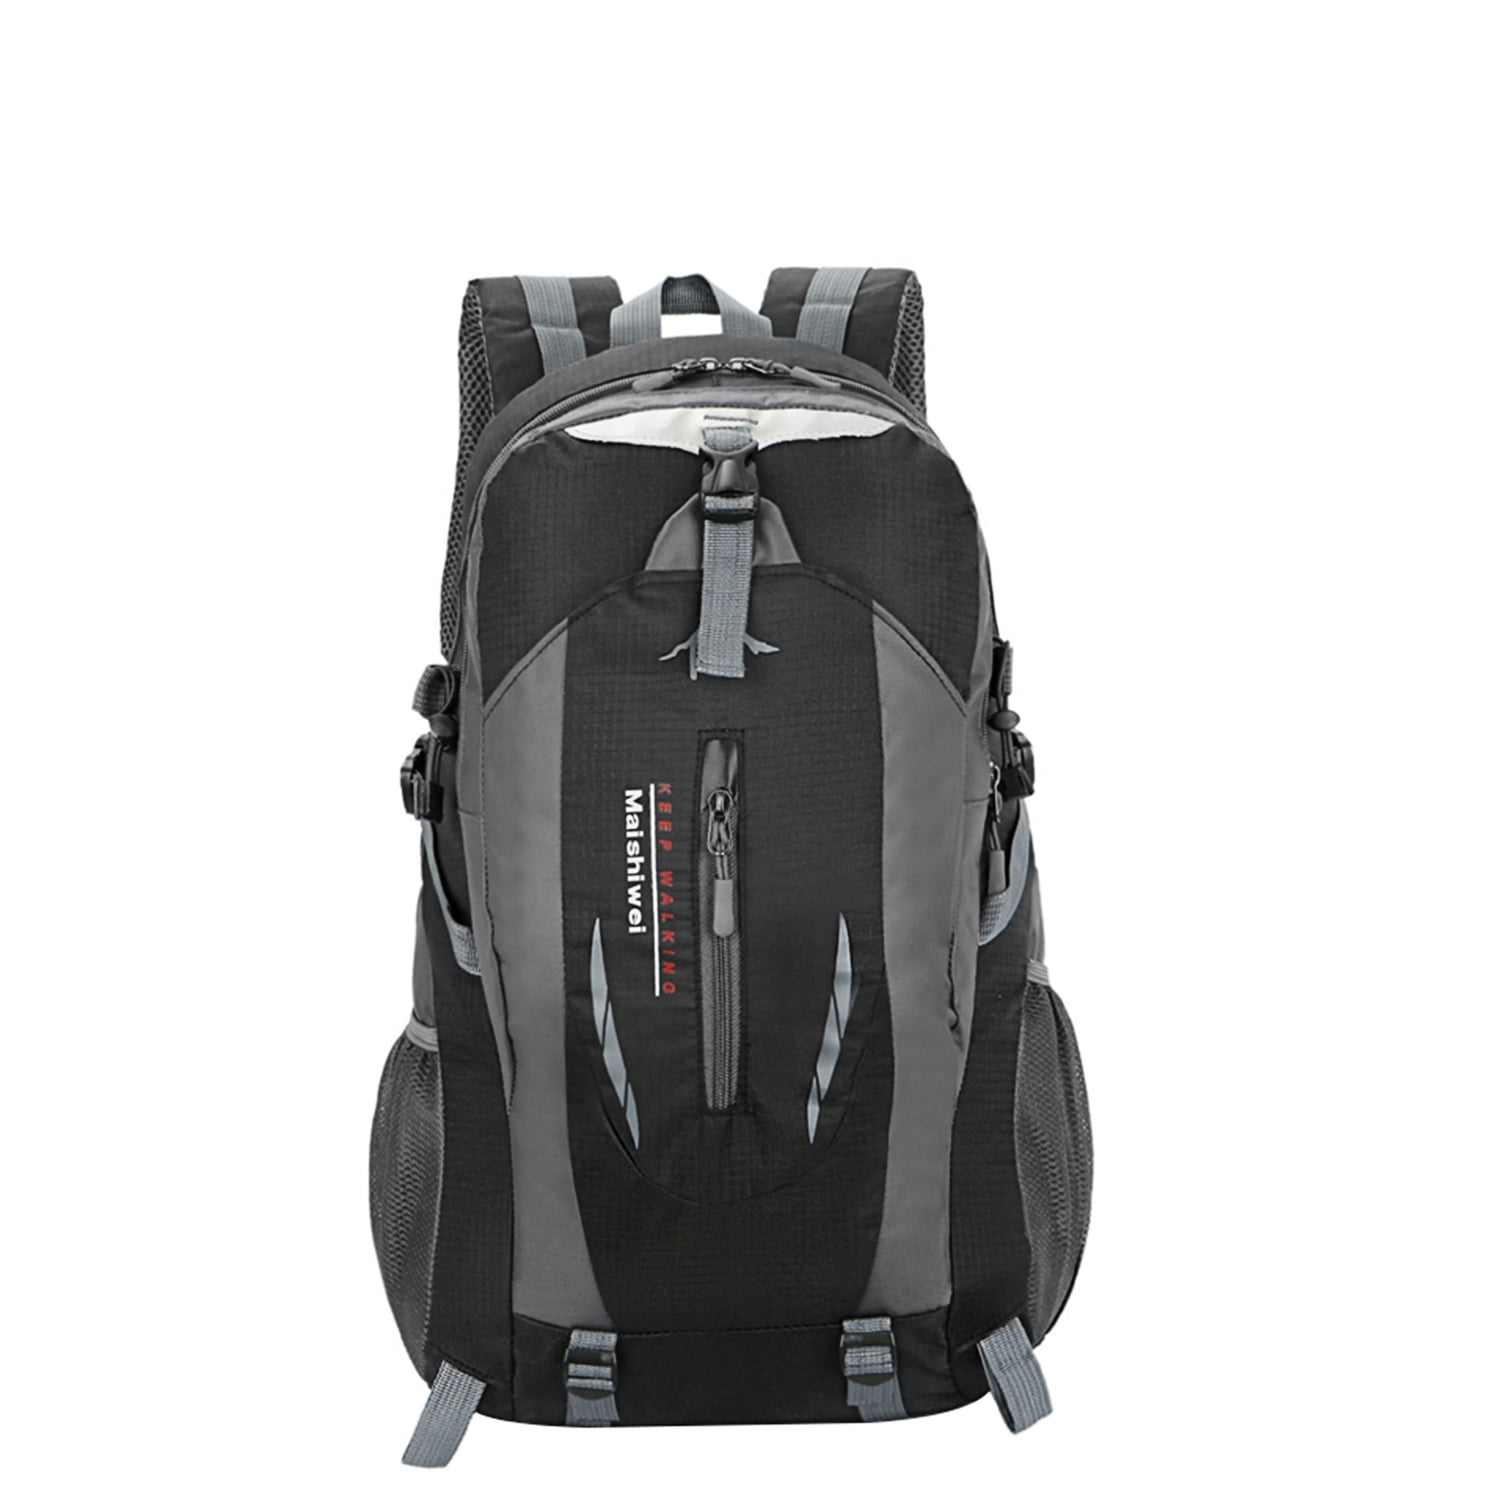 Rucksack Backpack Express33 x 43 x 17 cmSOLs Bags 